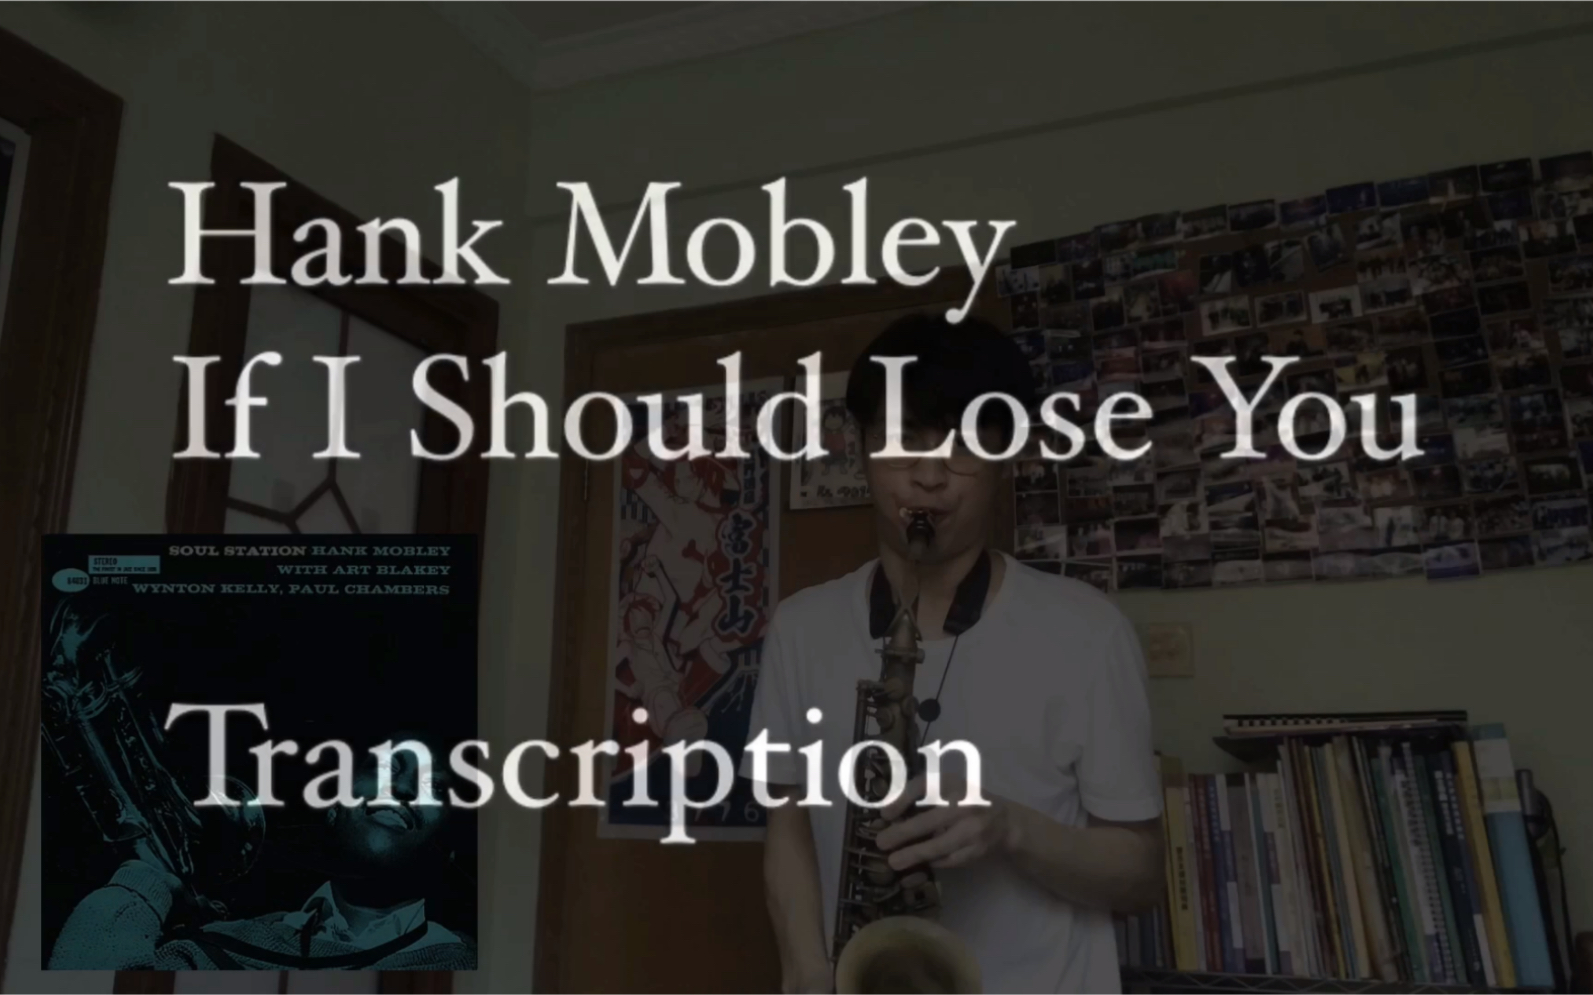 Hank mobley soul station transcription